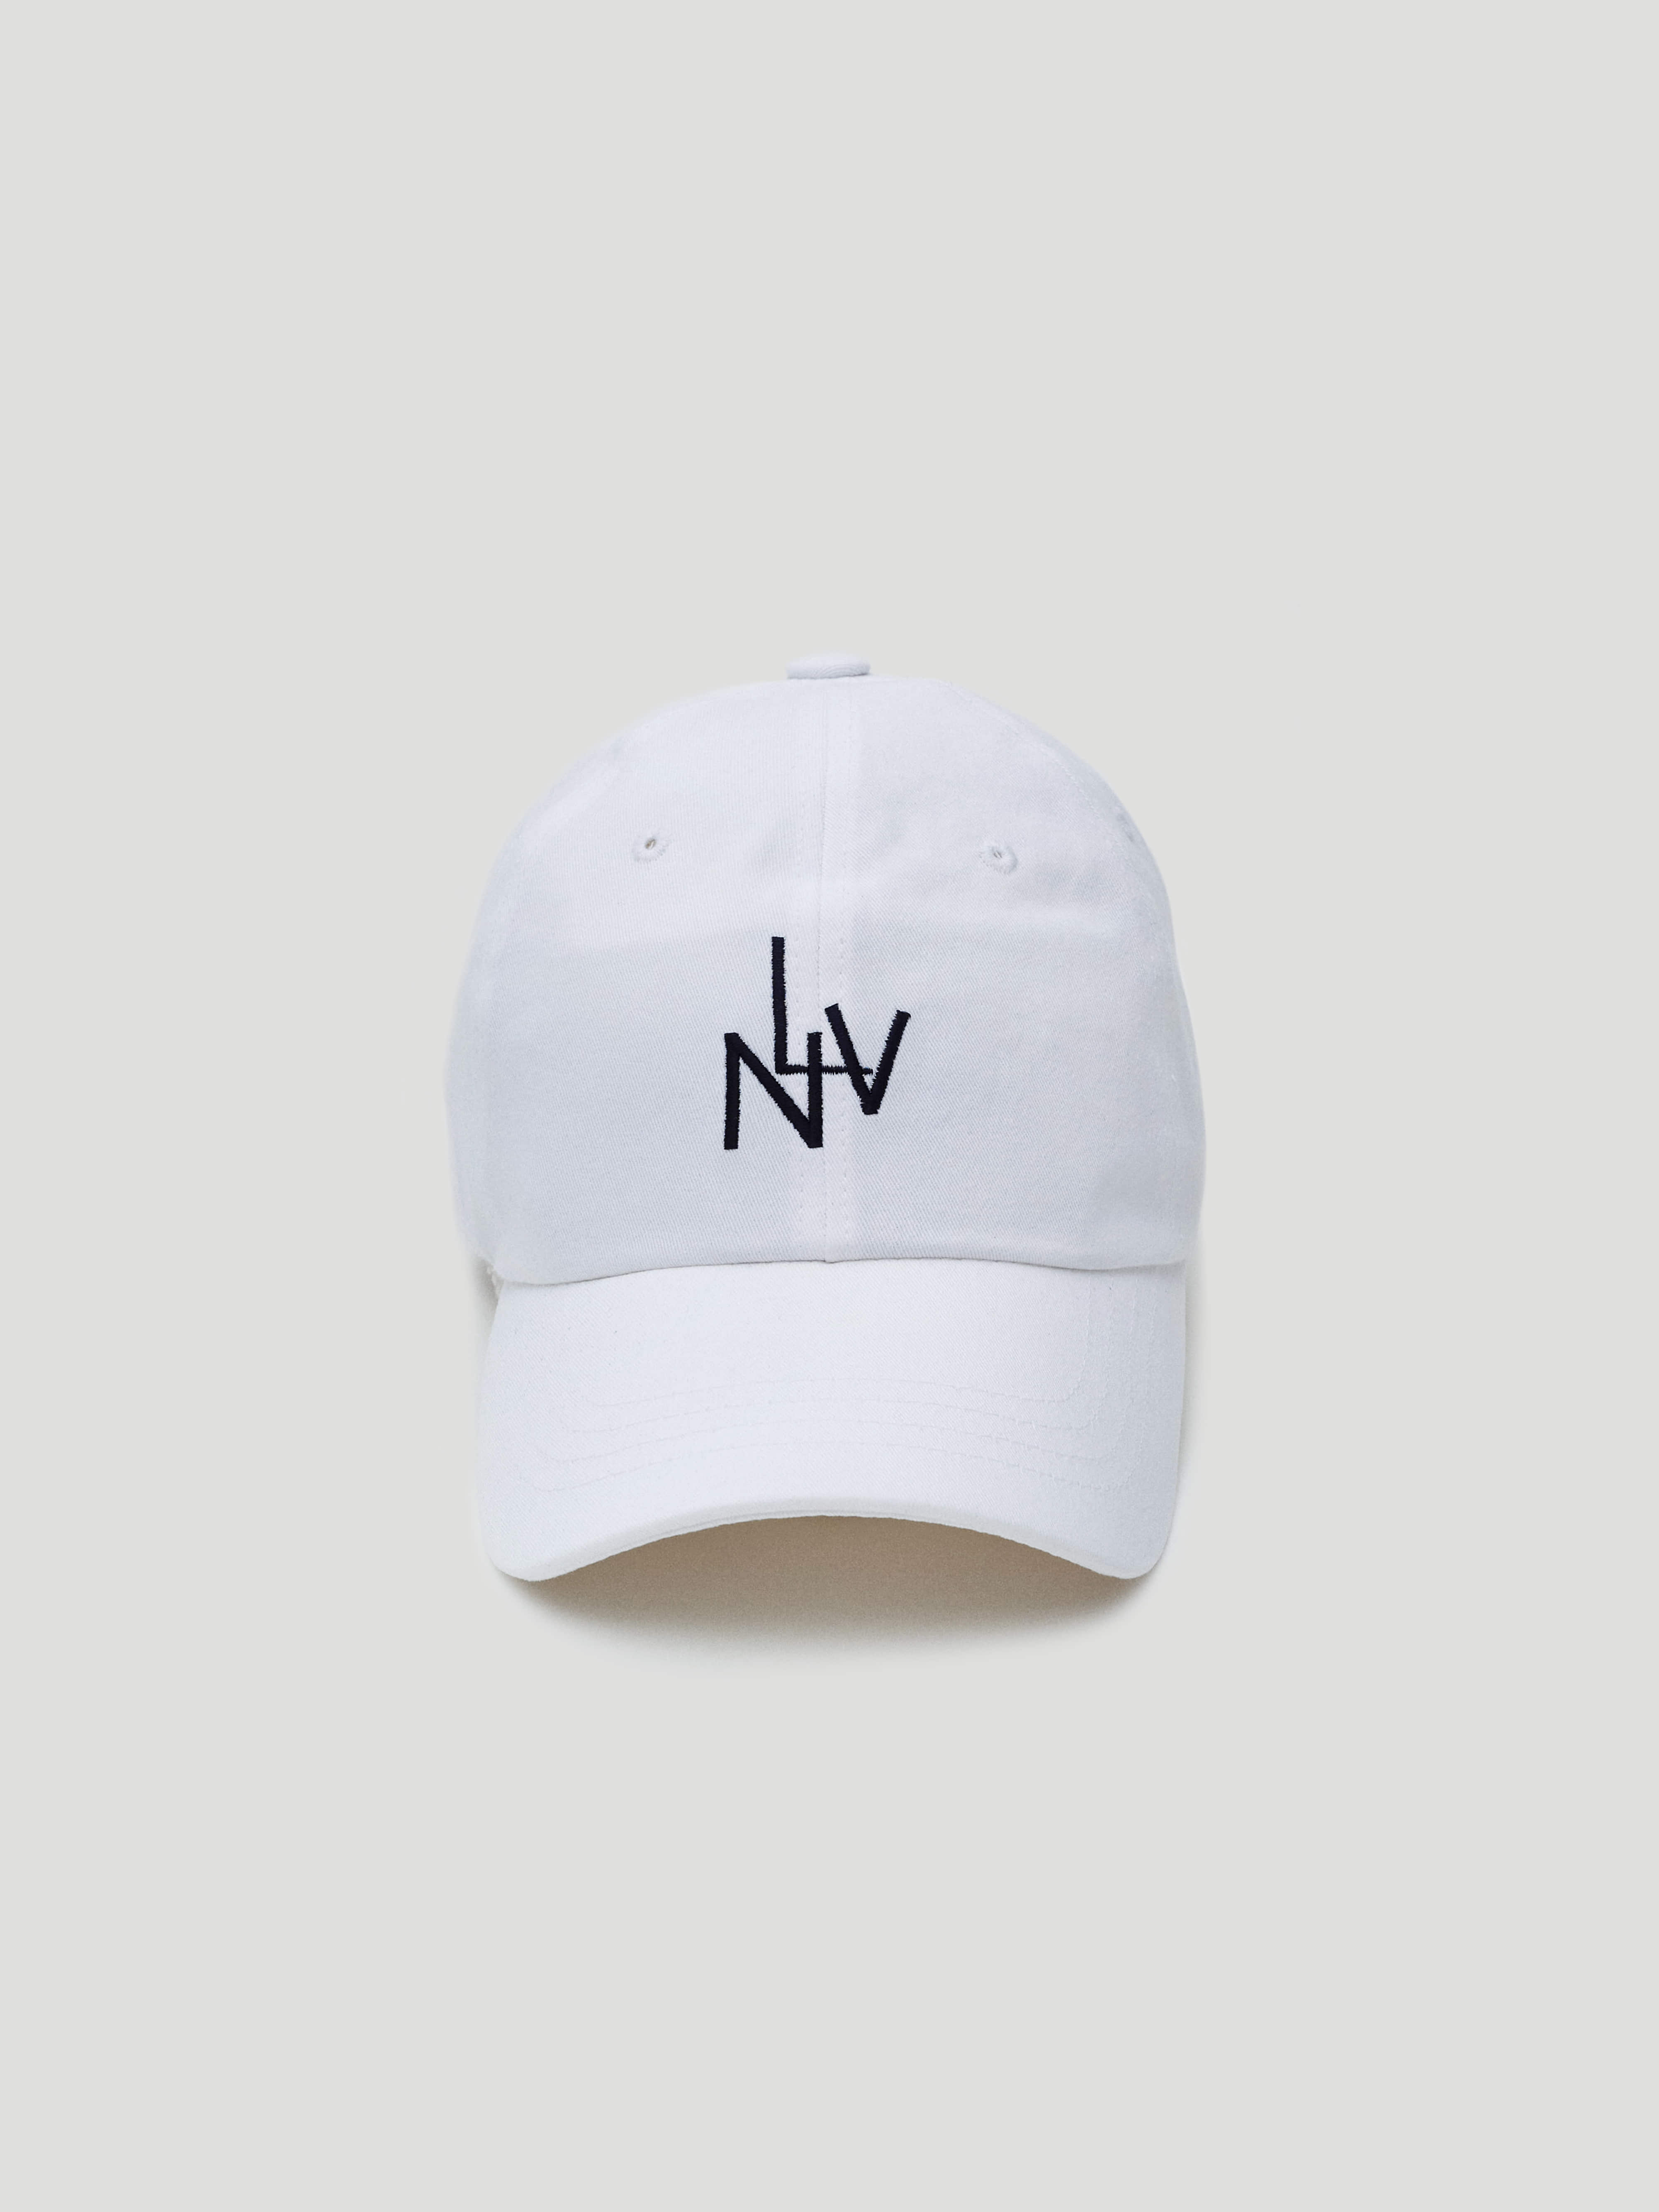 LNV White Ball cap (화이트)